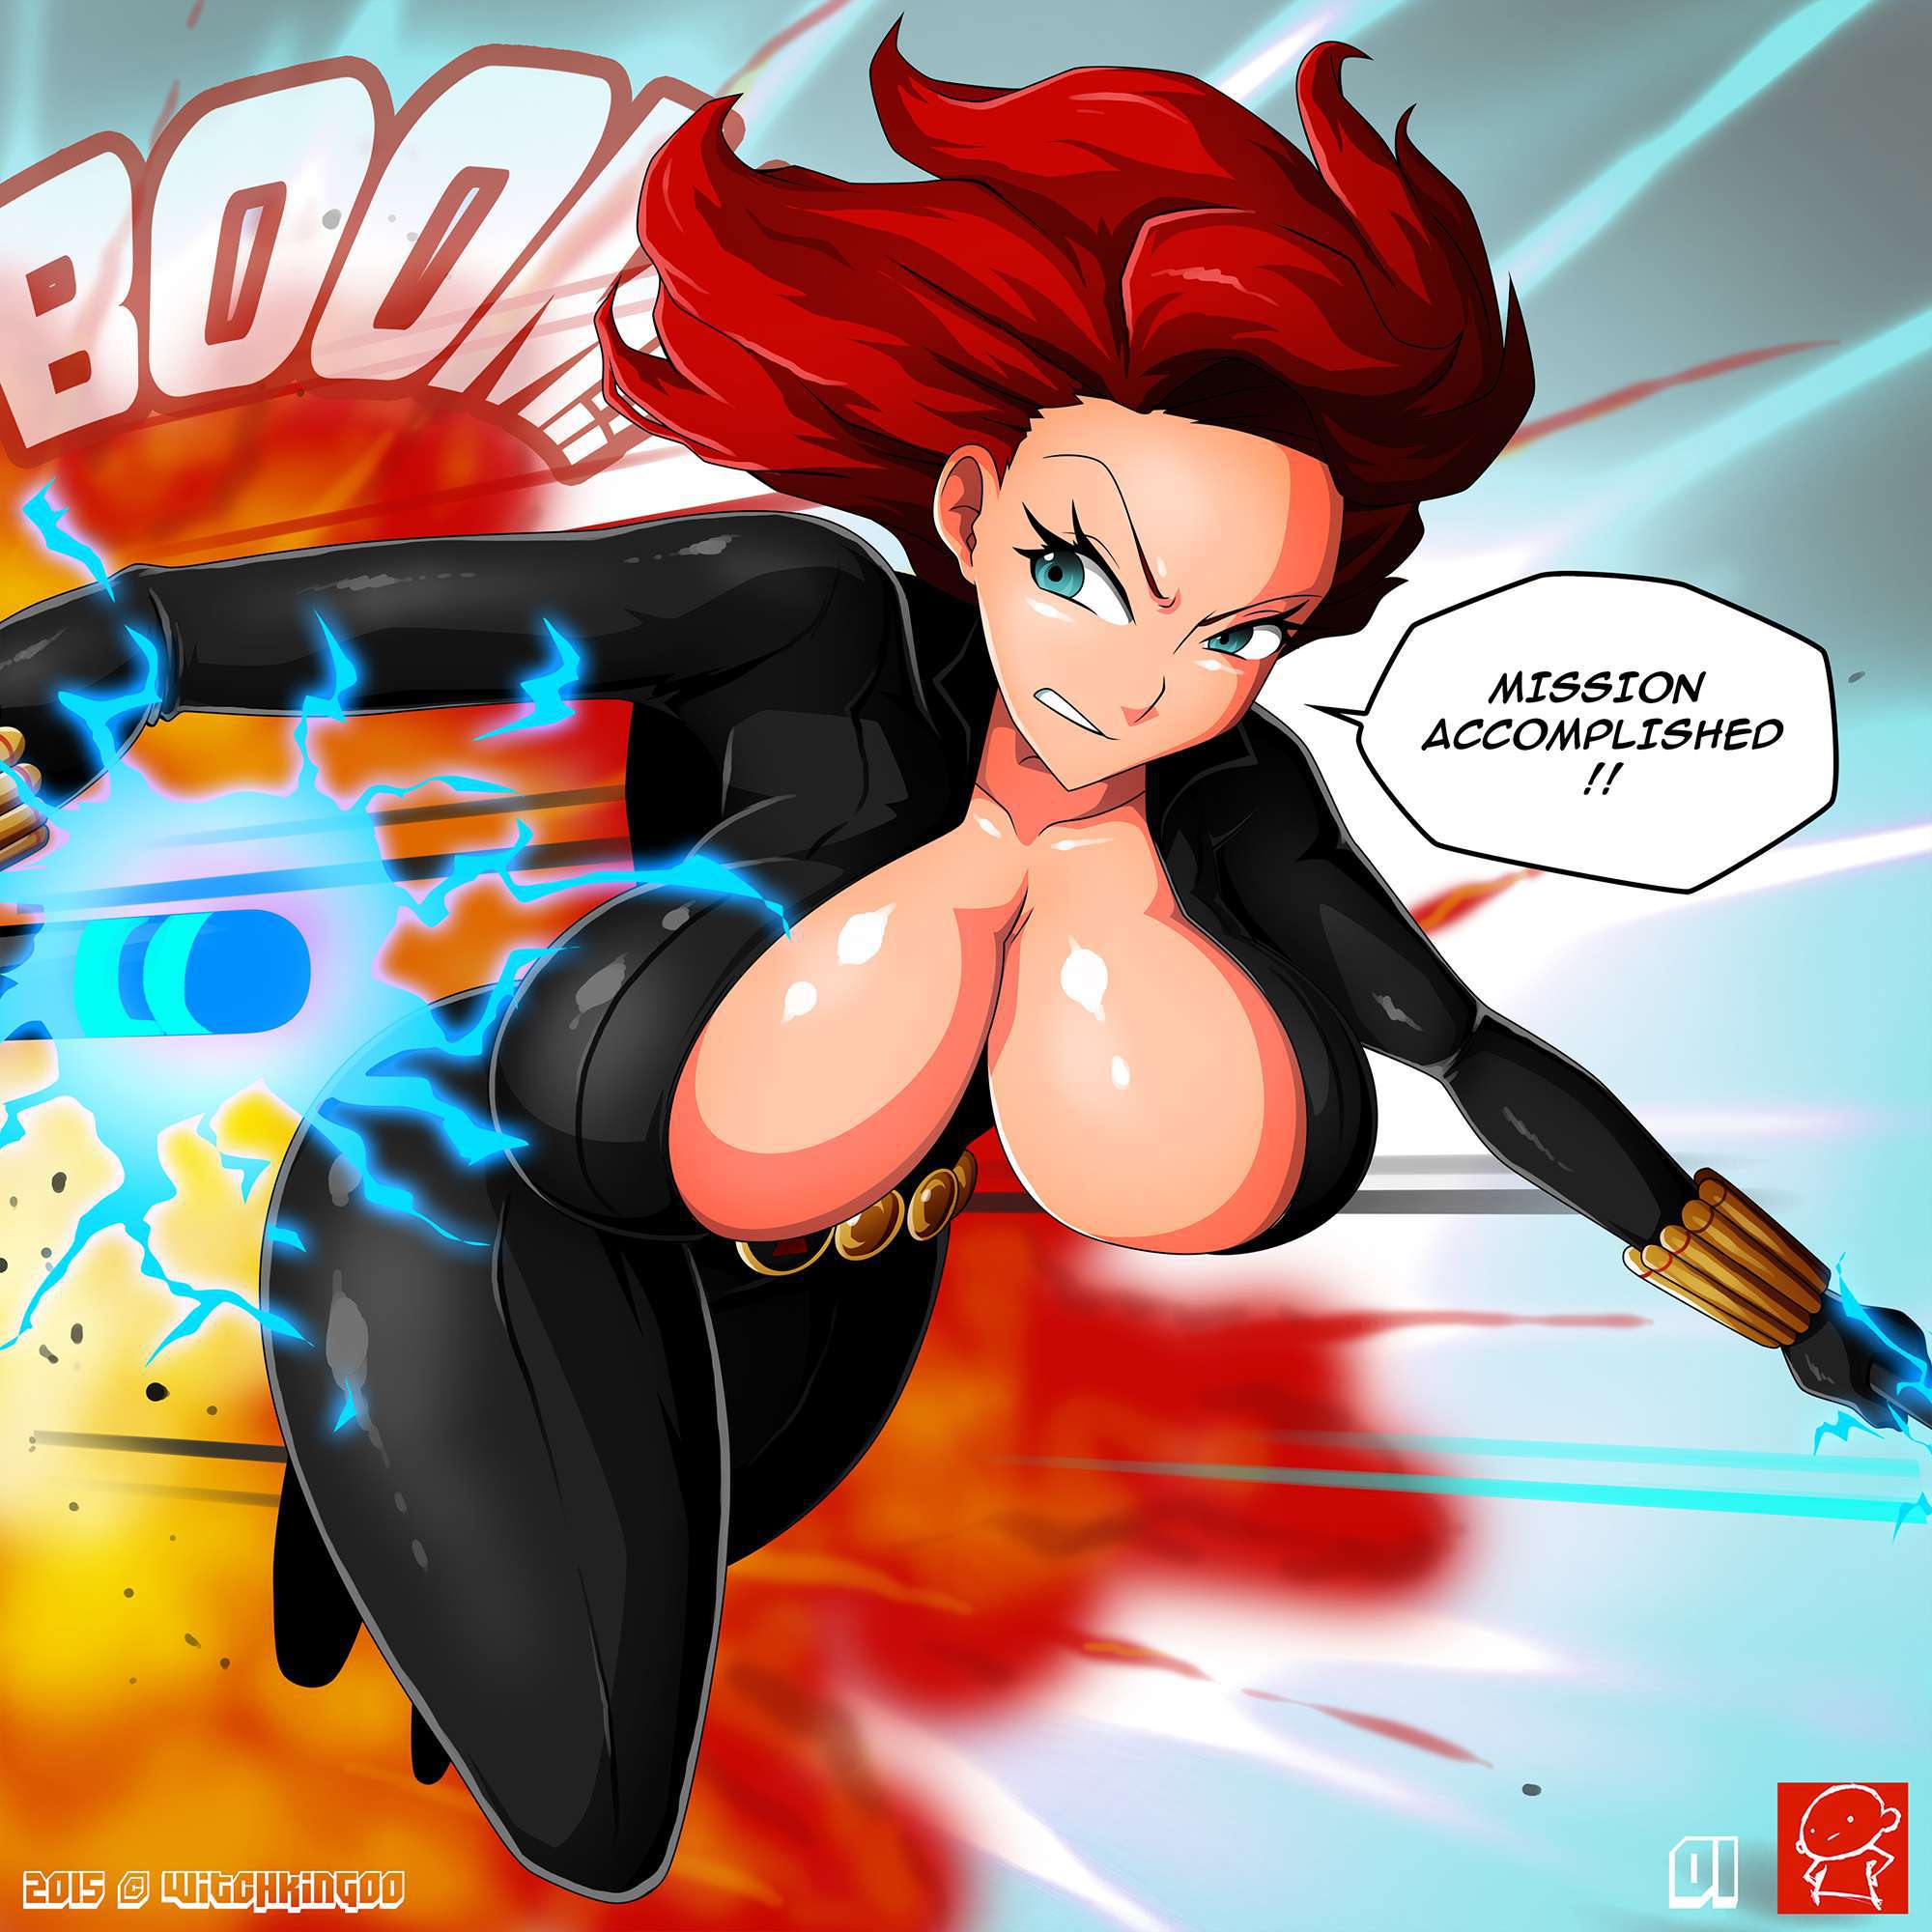 Sexy Black Widow Porn - best black widow images on pinterest black widow marvel 10 - MegaPornX